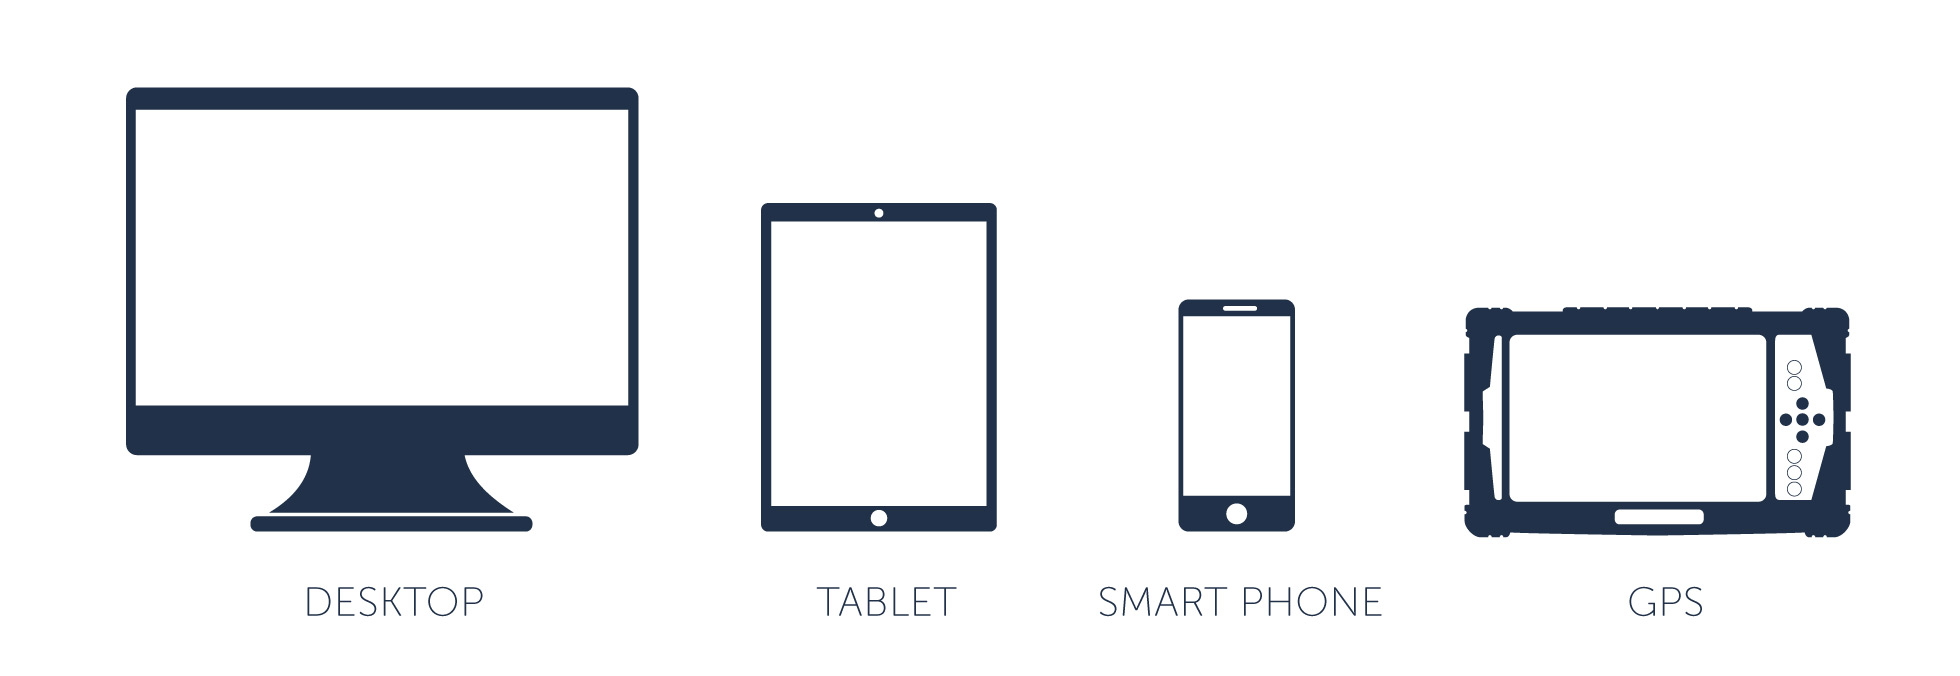 SimpliCity Devices - Desktop, Tablet, Smartphone, GPS